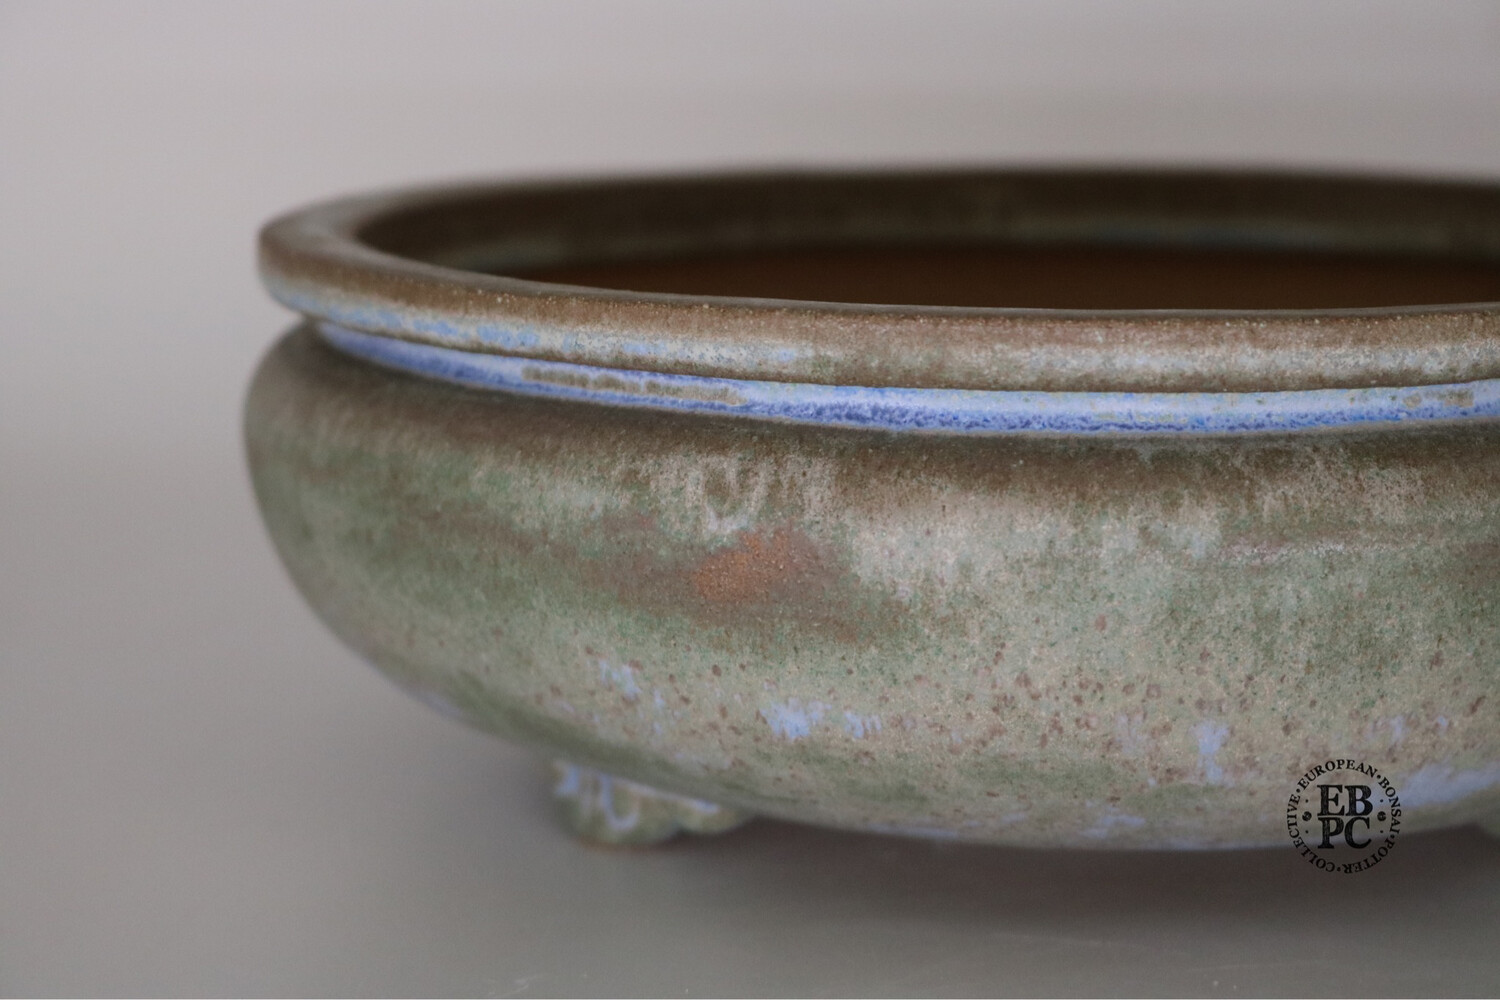 Fukurou Ceramics - Switzerland. 23.5cm; Hand-made; Round; 'Bag-style' Design (Fukuro-shiki) to Lip; Delicate Feet; Superb Glaze; Greens; Browns; Hints of Baby Blue; Patrik Lüthi